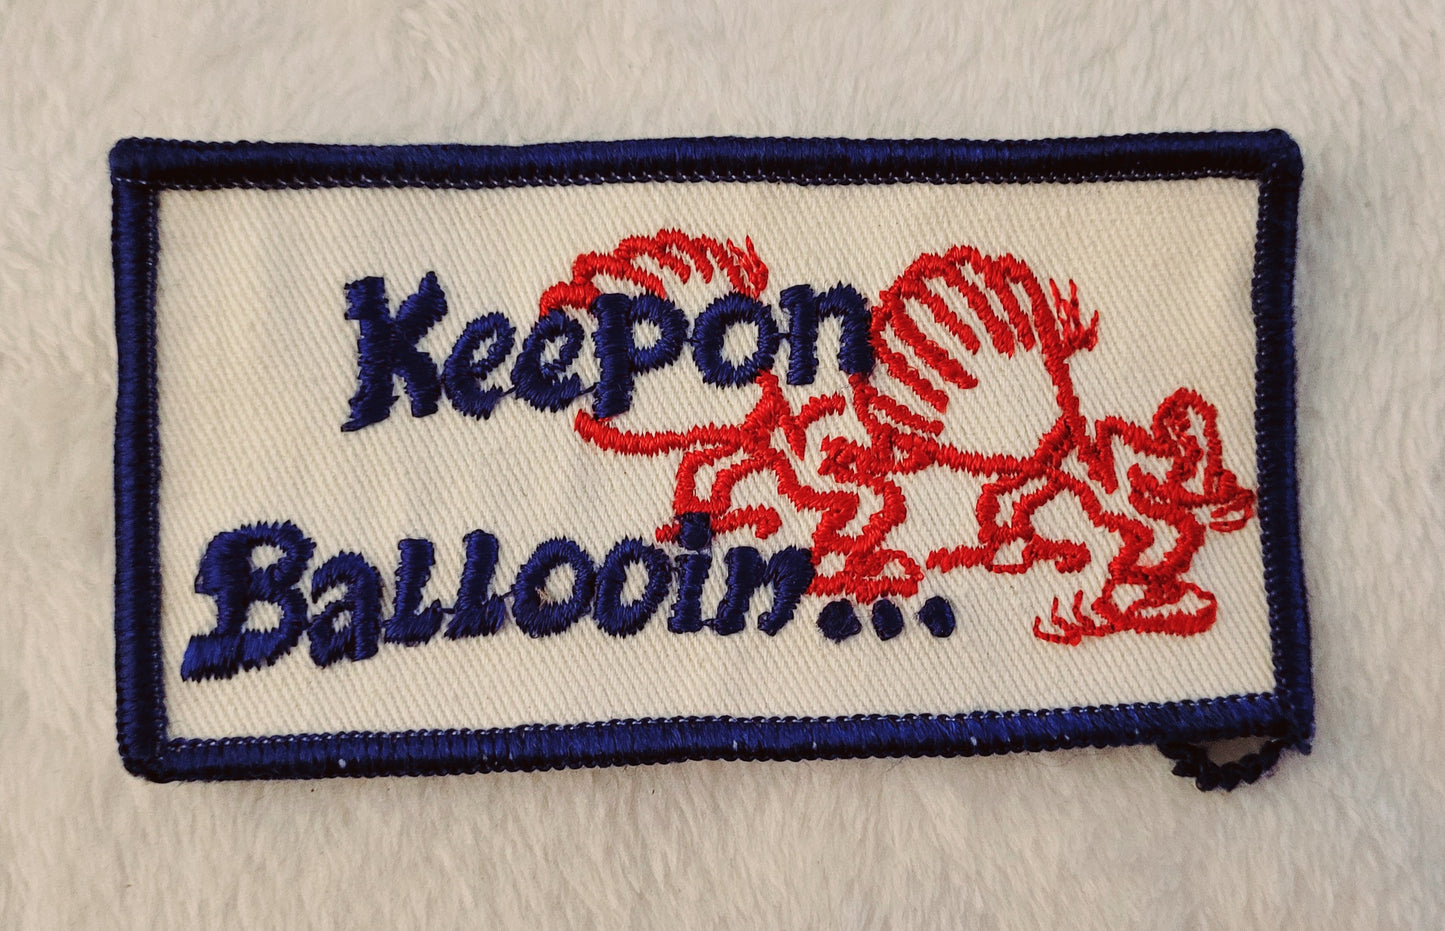 "Keep On Balloonin..." Funny Slogan Patch